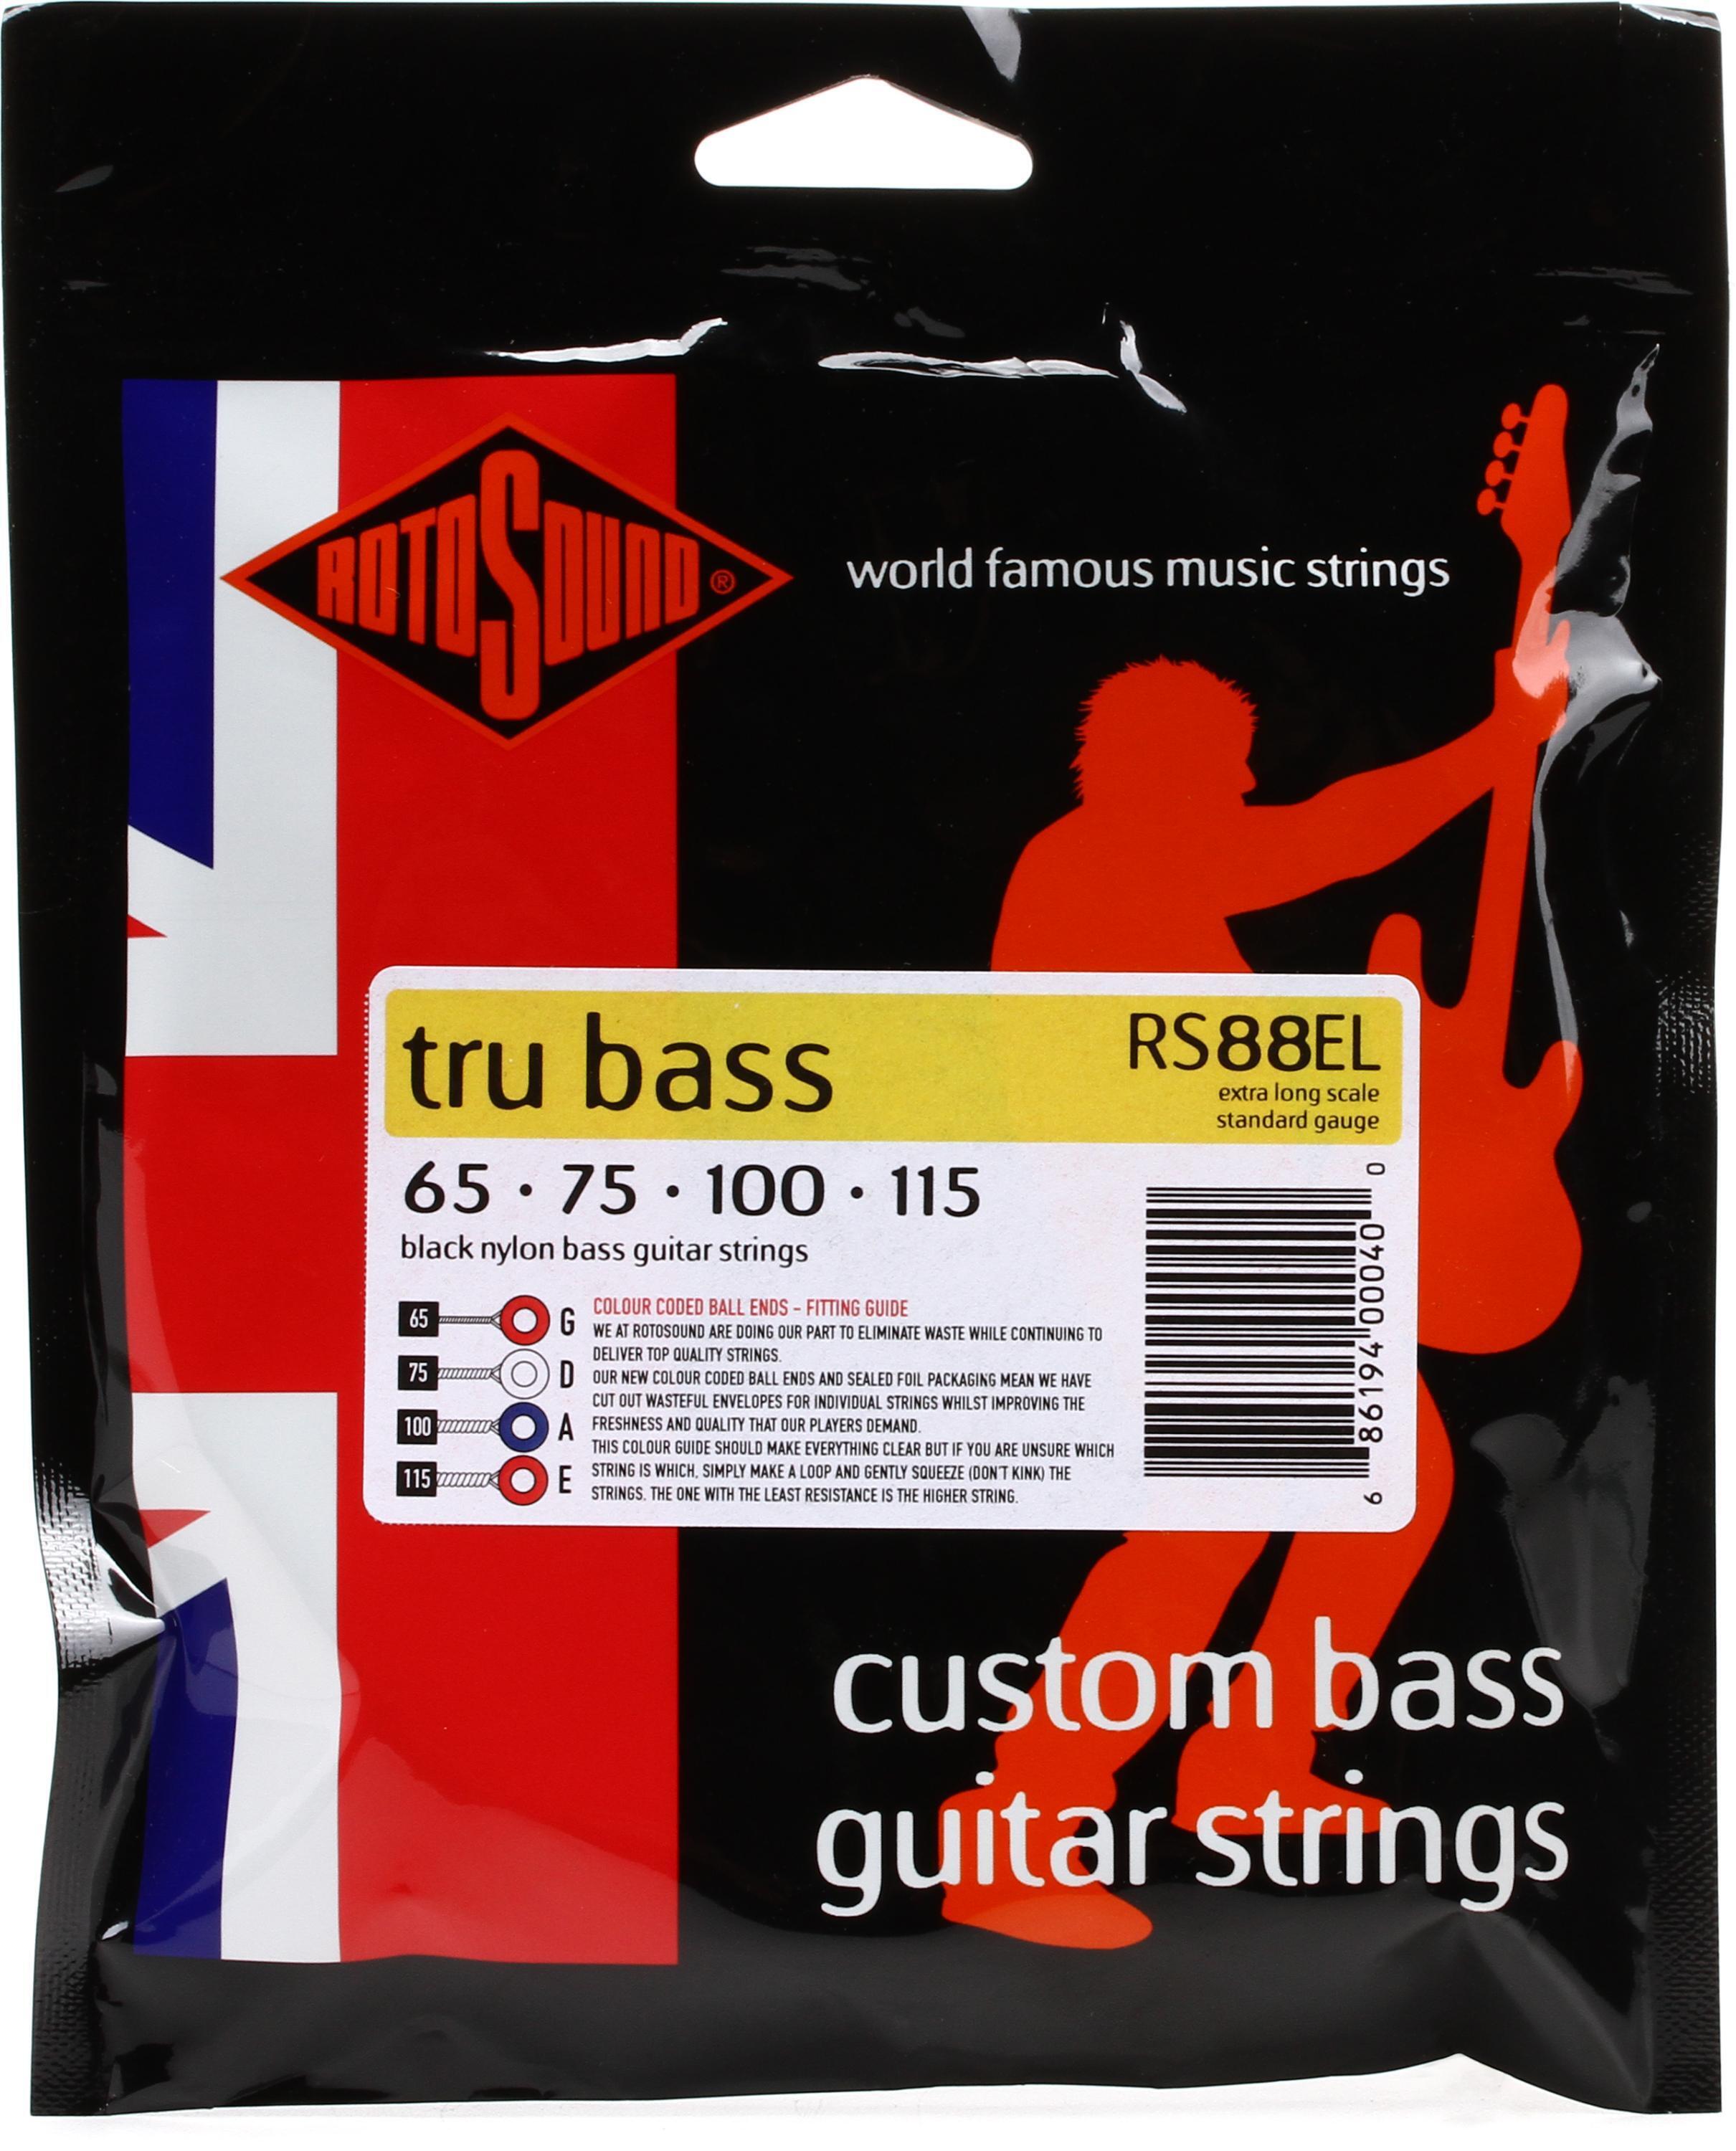 Rotosound RS88EL Tru Bass 88 Black Nylon Tapewound Bass Guitar